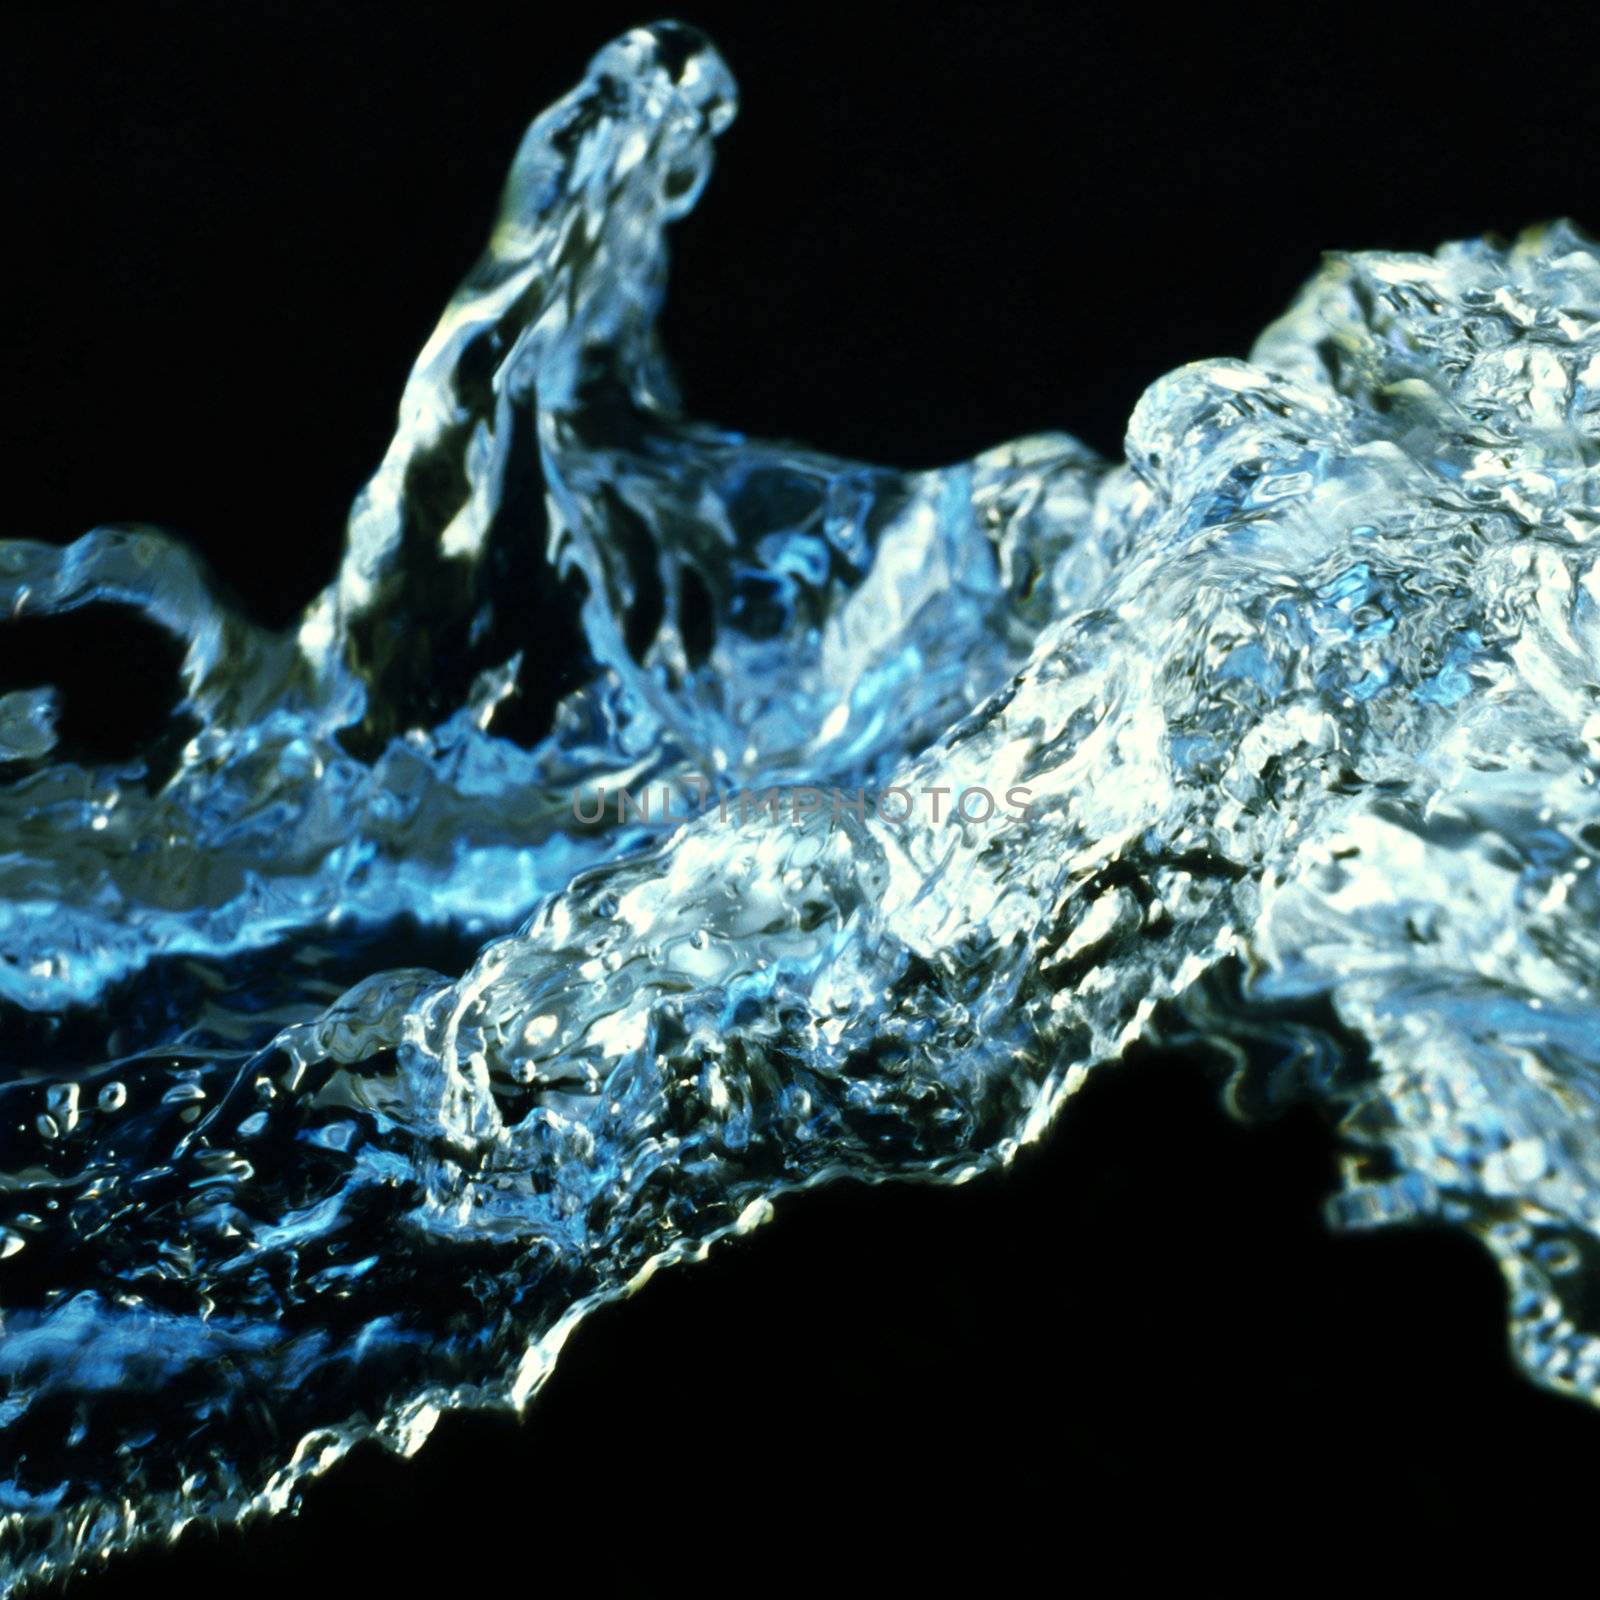 Photo of water splash isolated on black